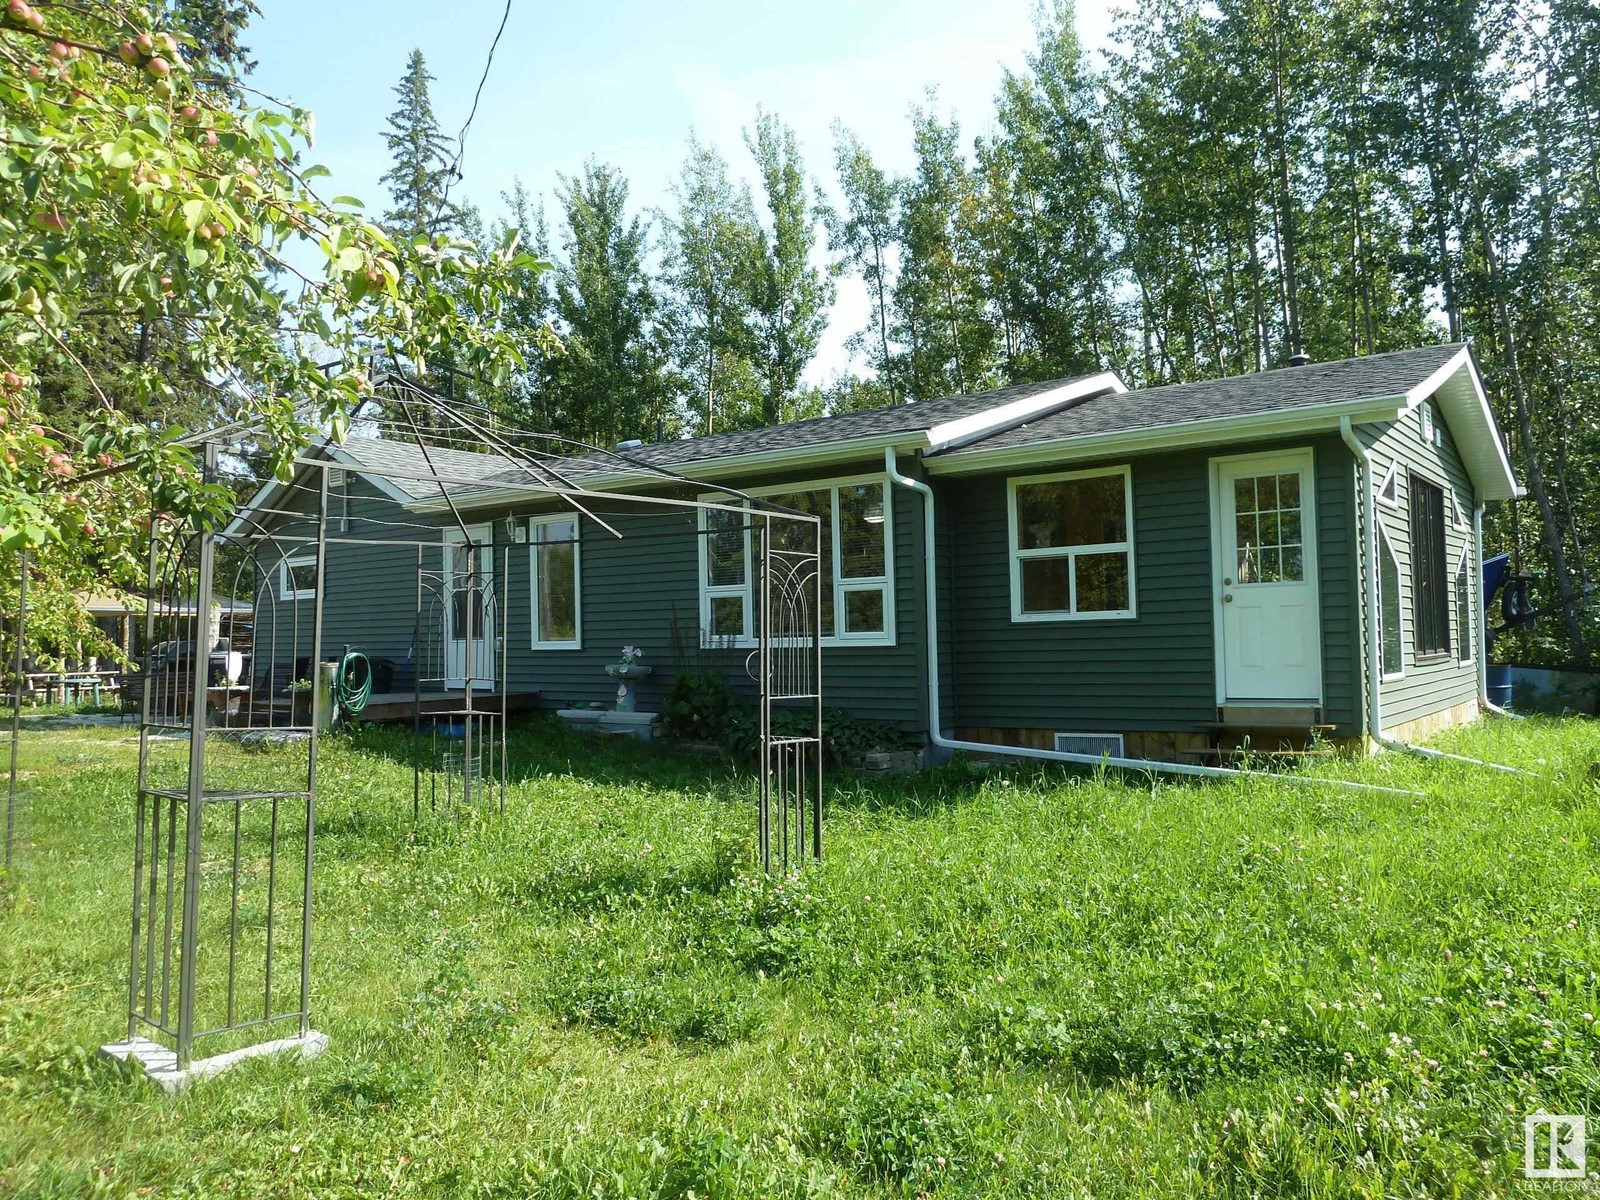 55118 RGE RD 33 located in Rural Lac Ste. Anne County, Alberta